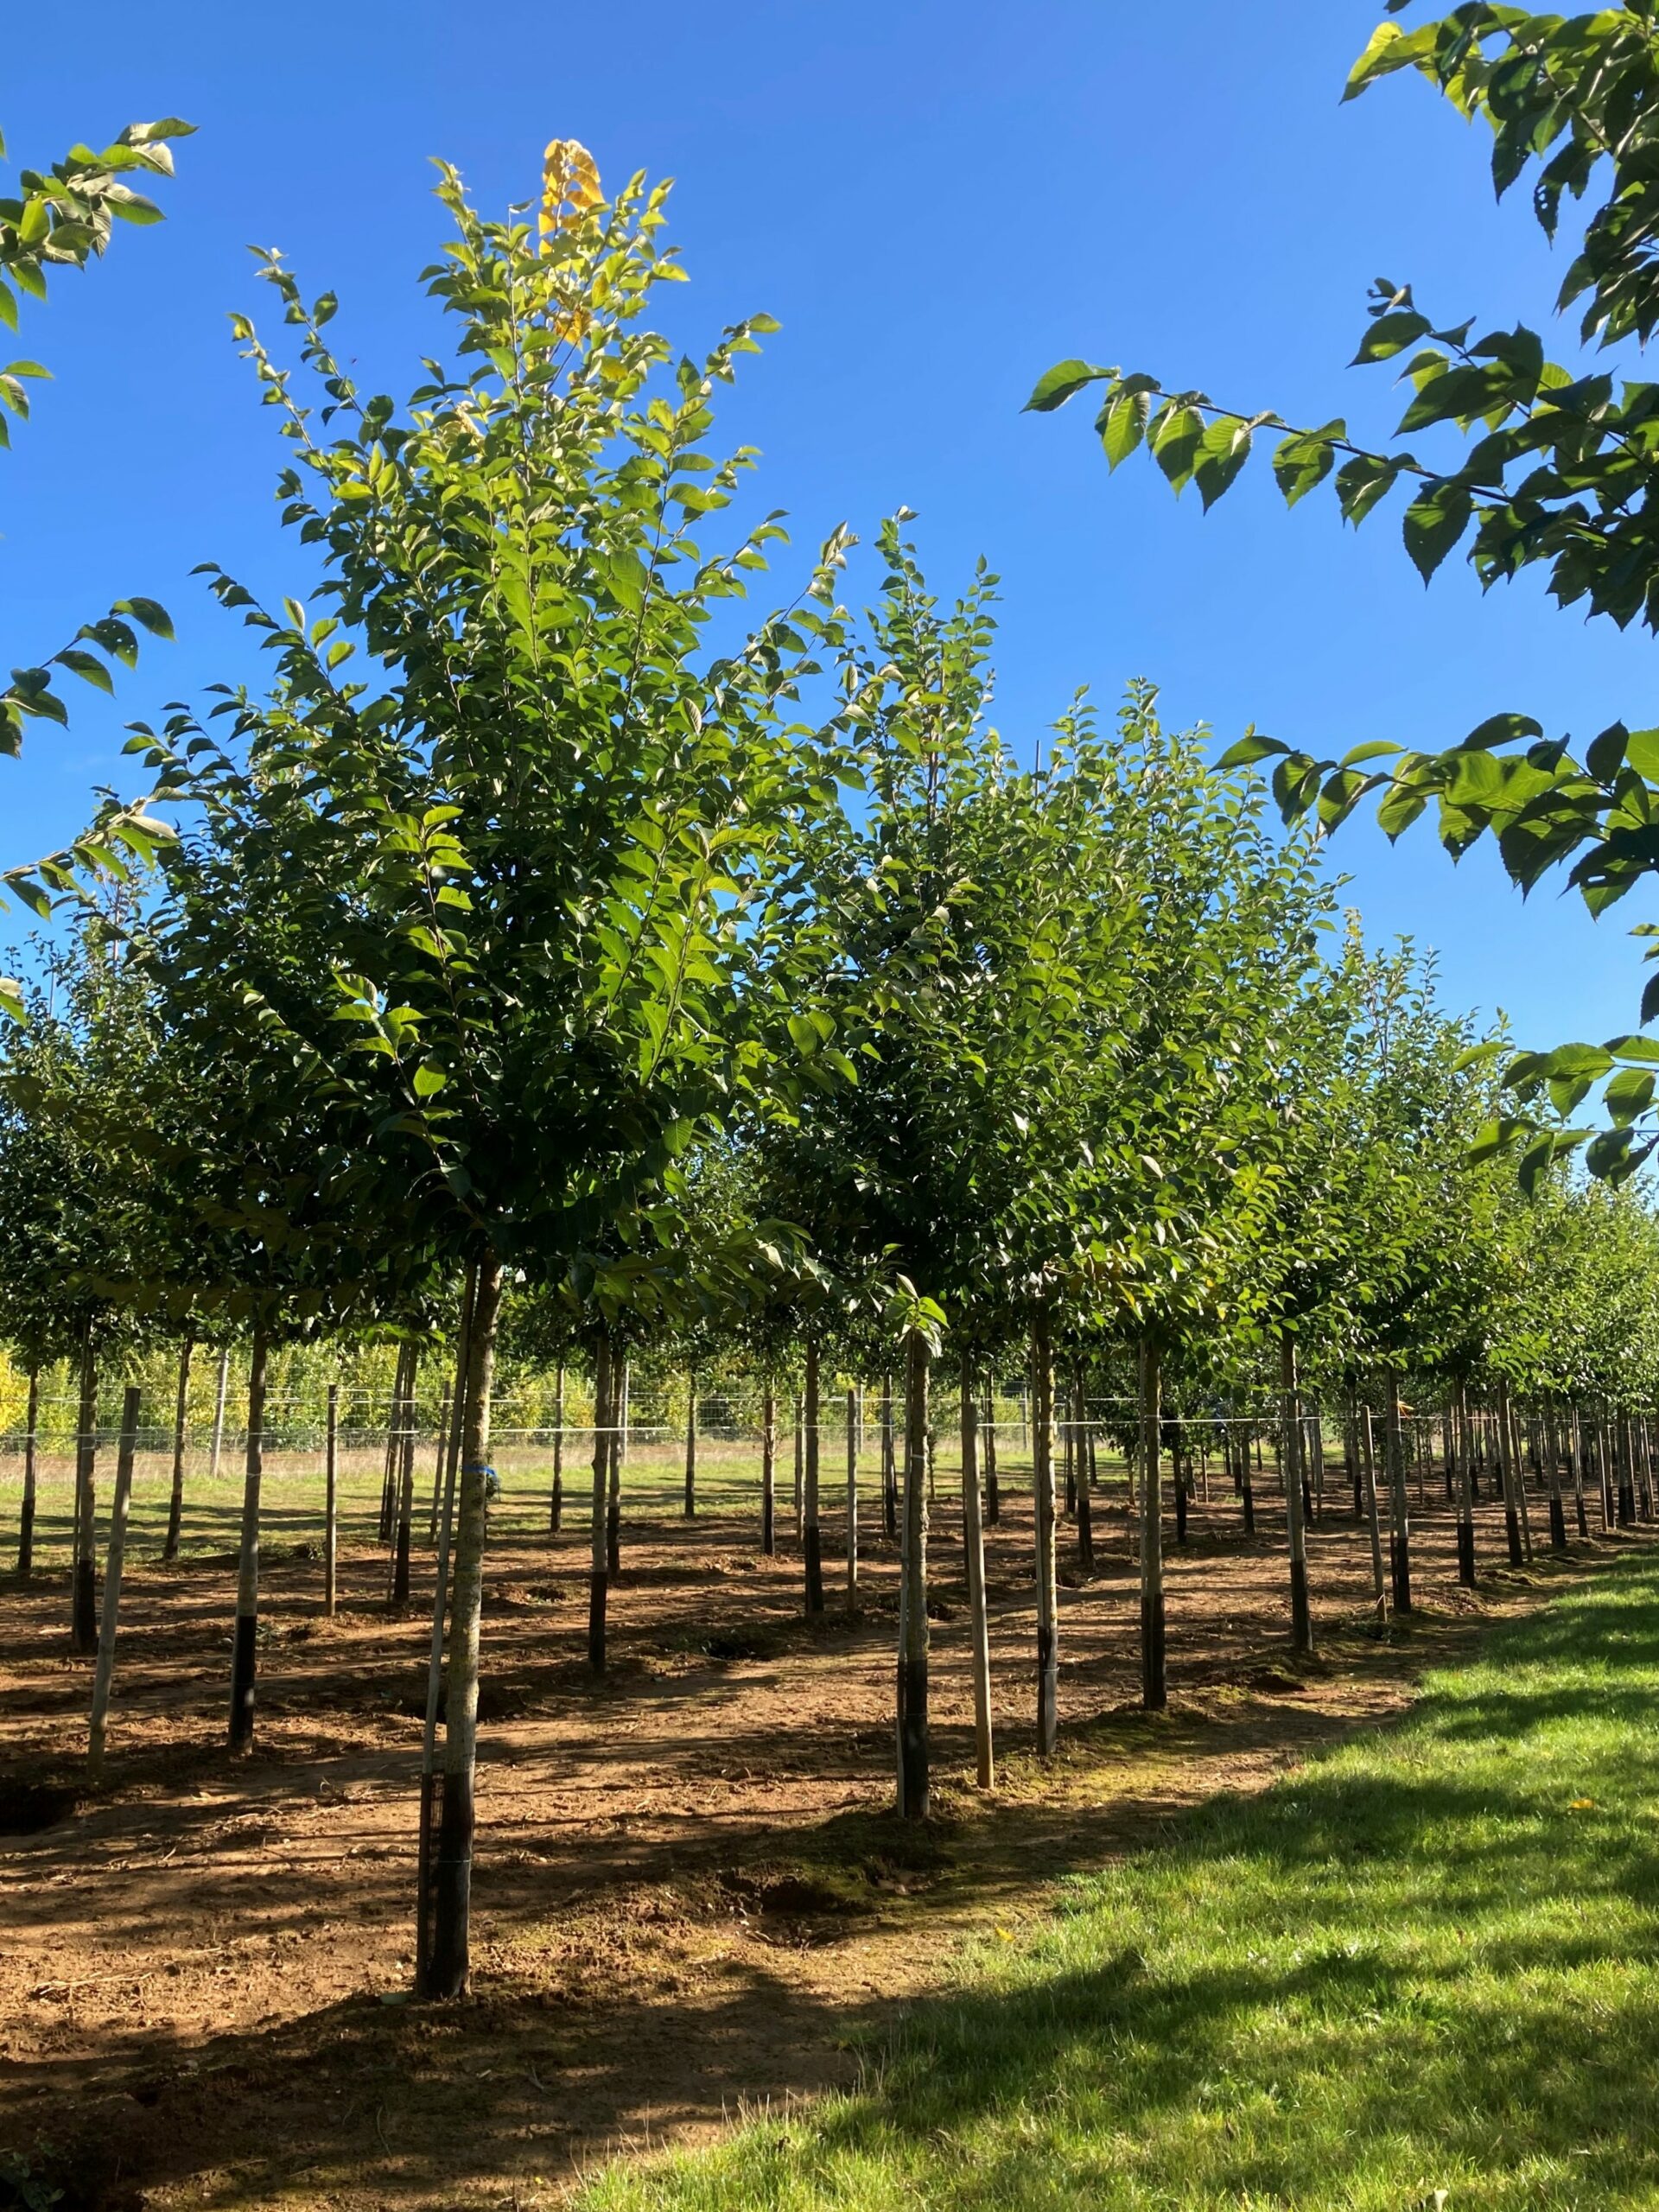 Ulmus rebona elm trees growing in rows in field